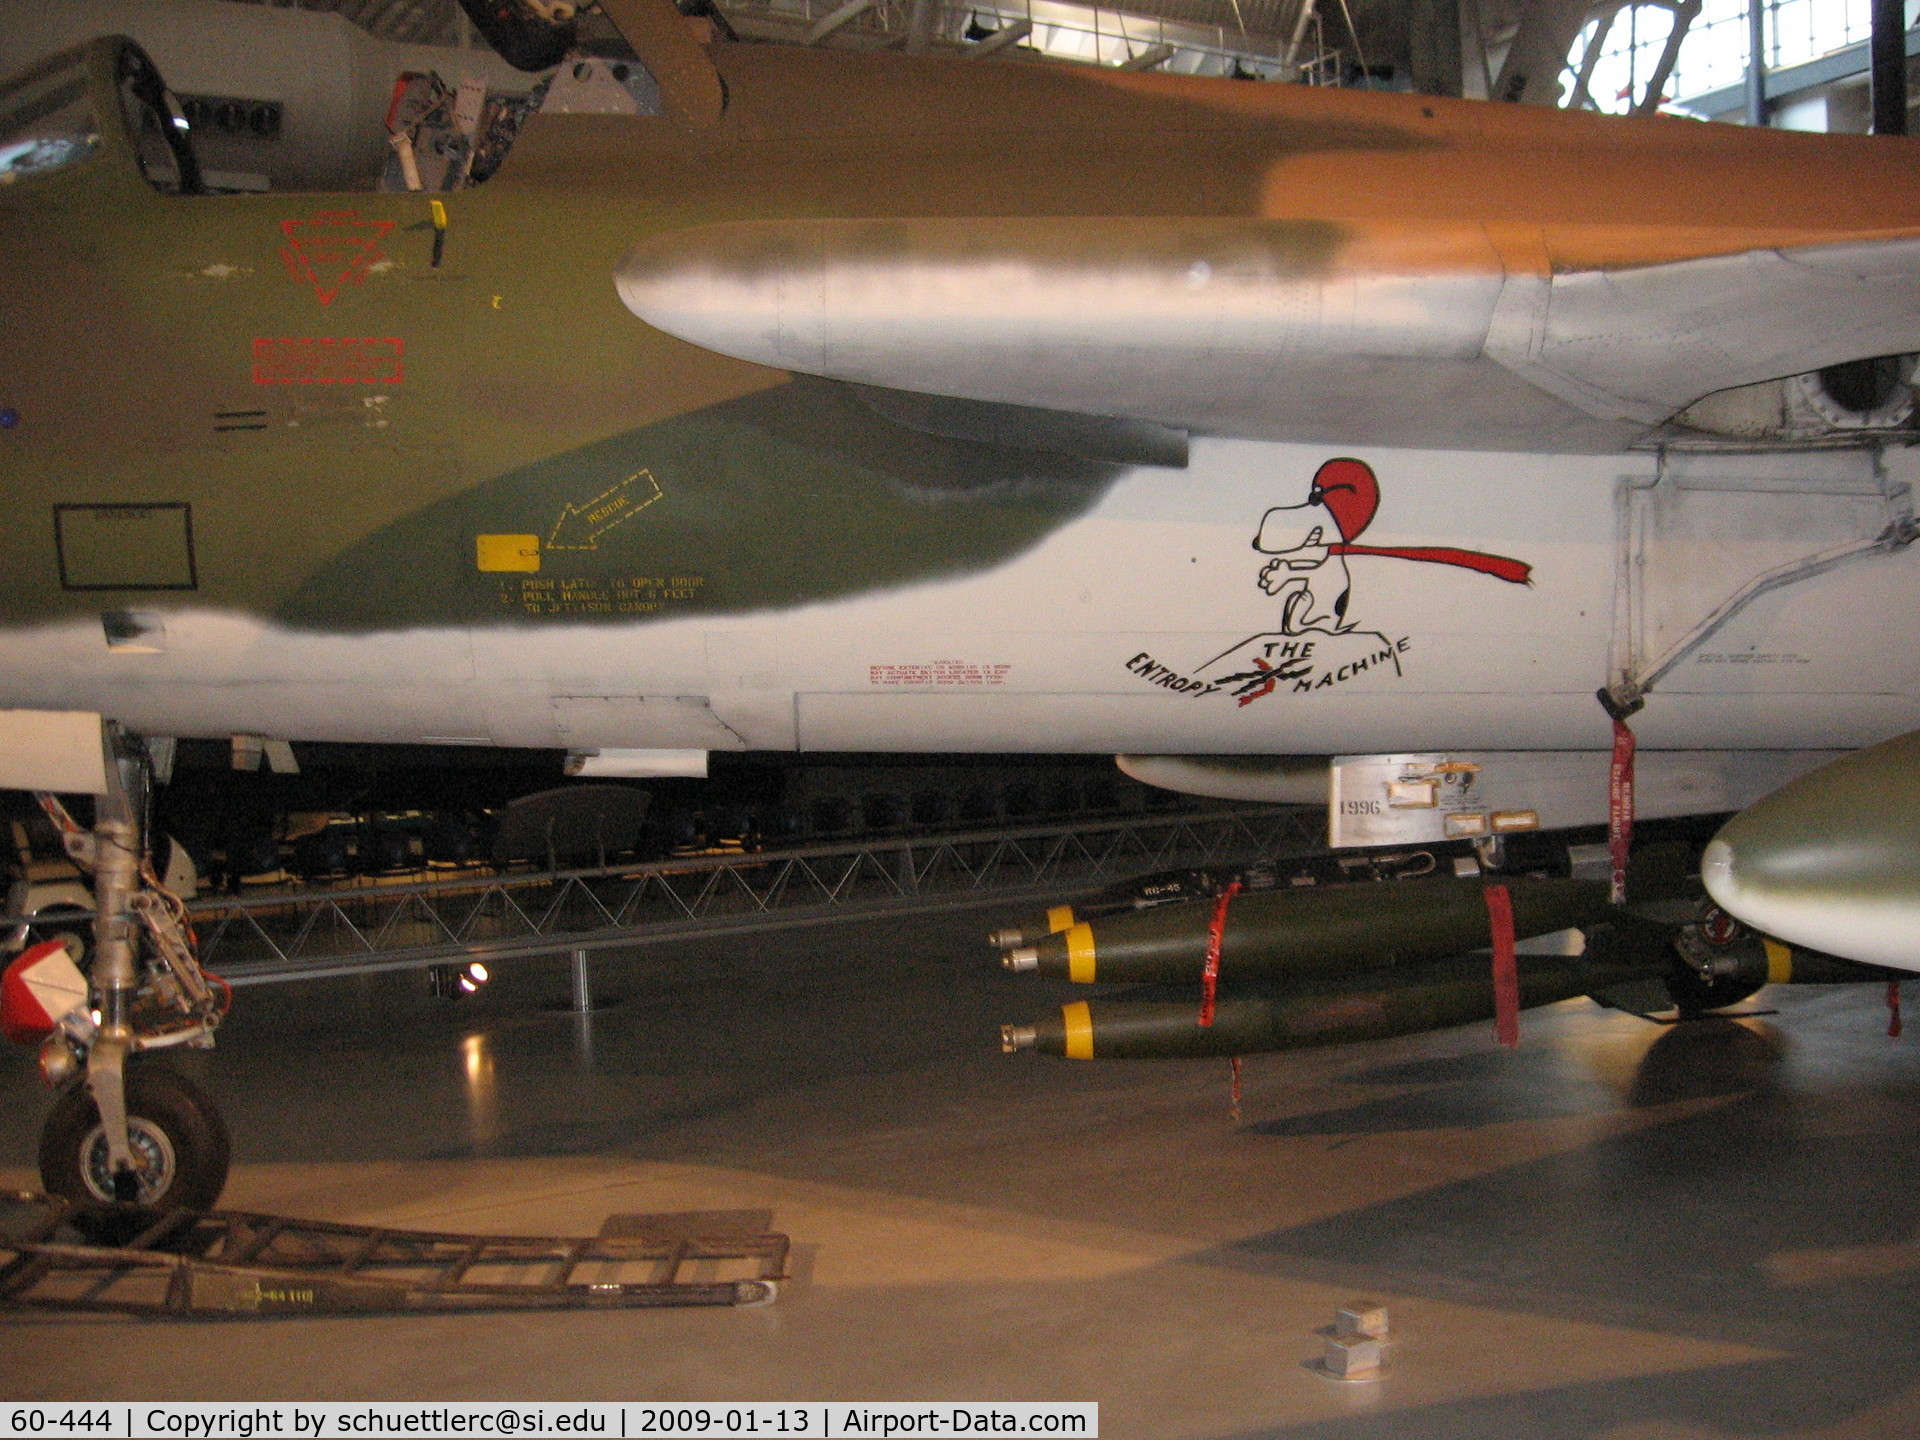 60-444, 1960 Republic F-105D Thunderchief C/N D133, redo of nose art